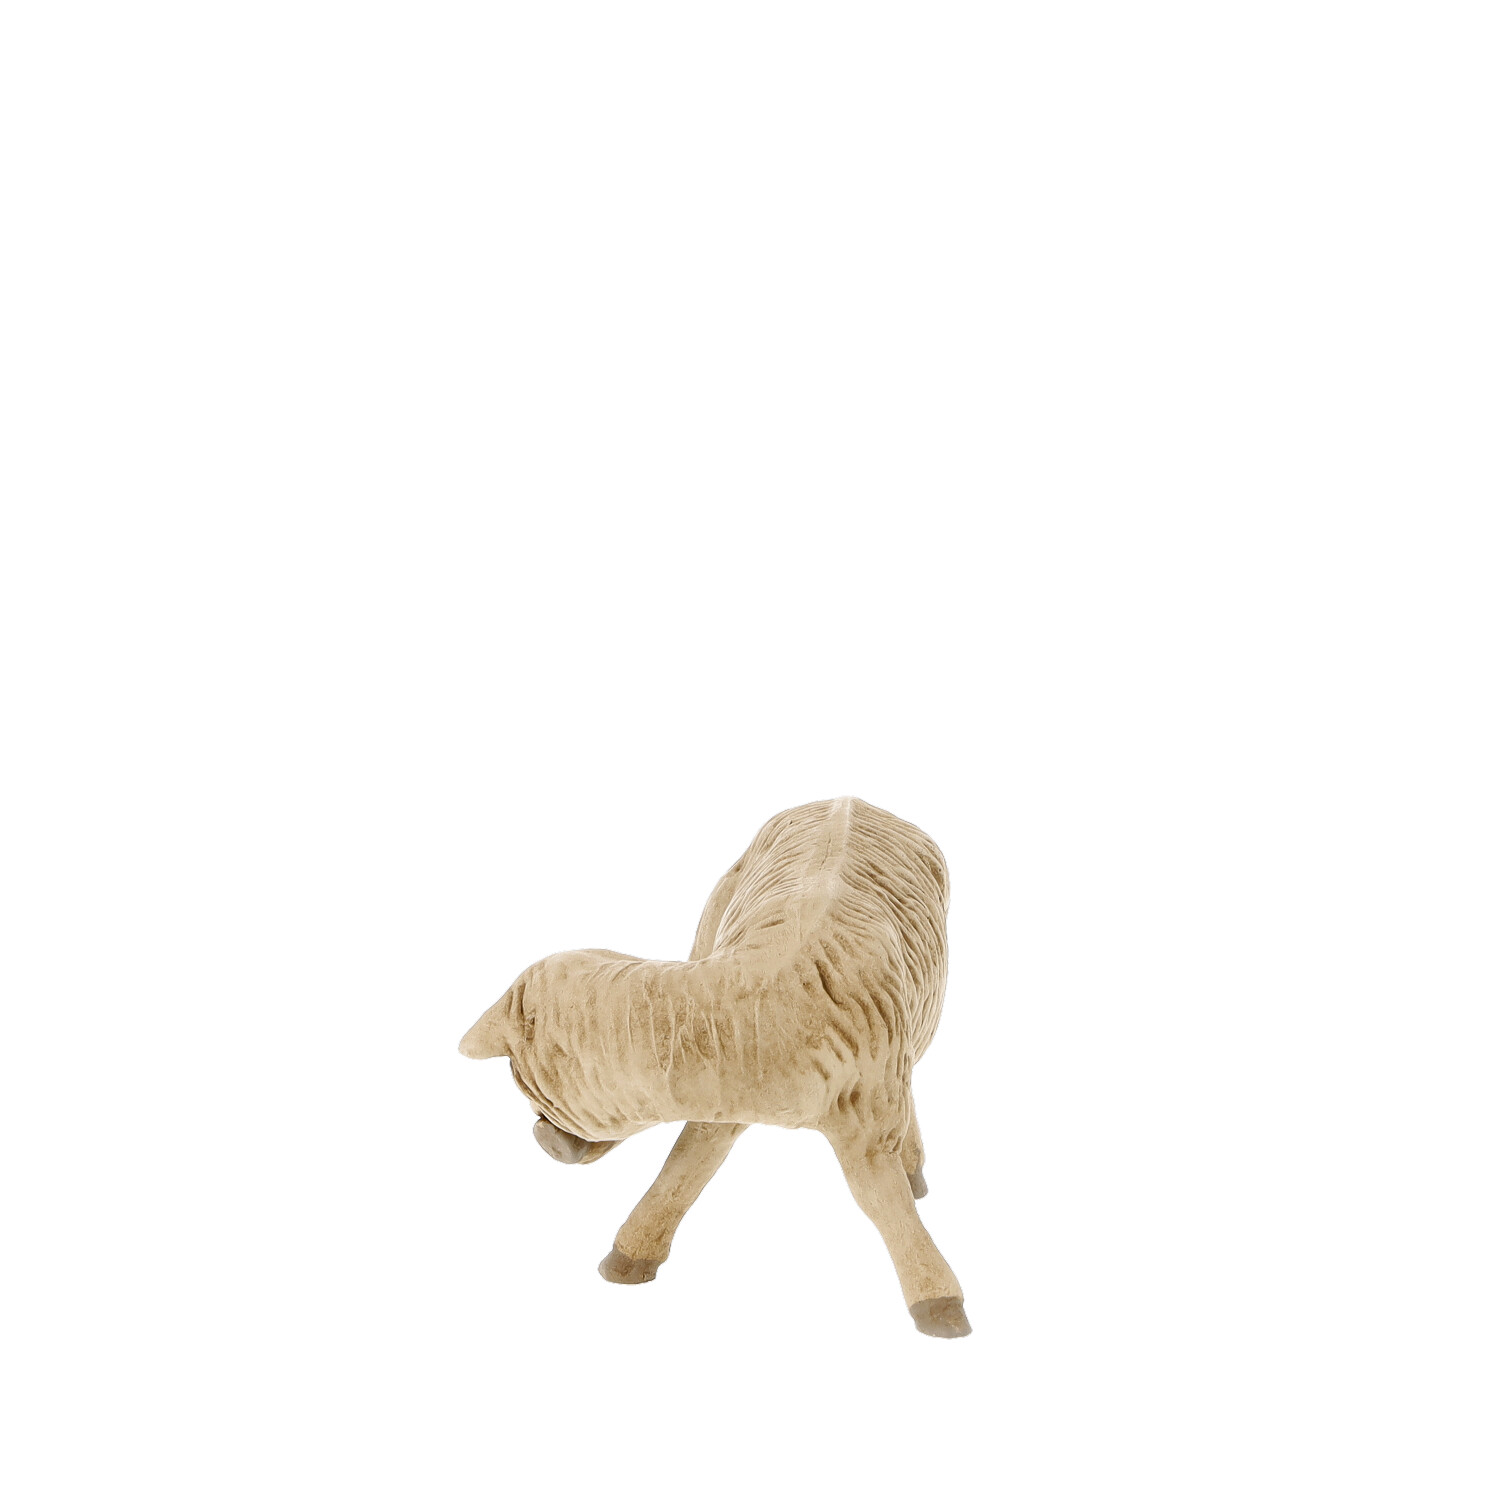 Sheep licking leg - Marolin Nativity figure - made in Germany